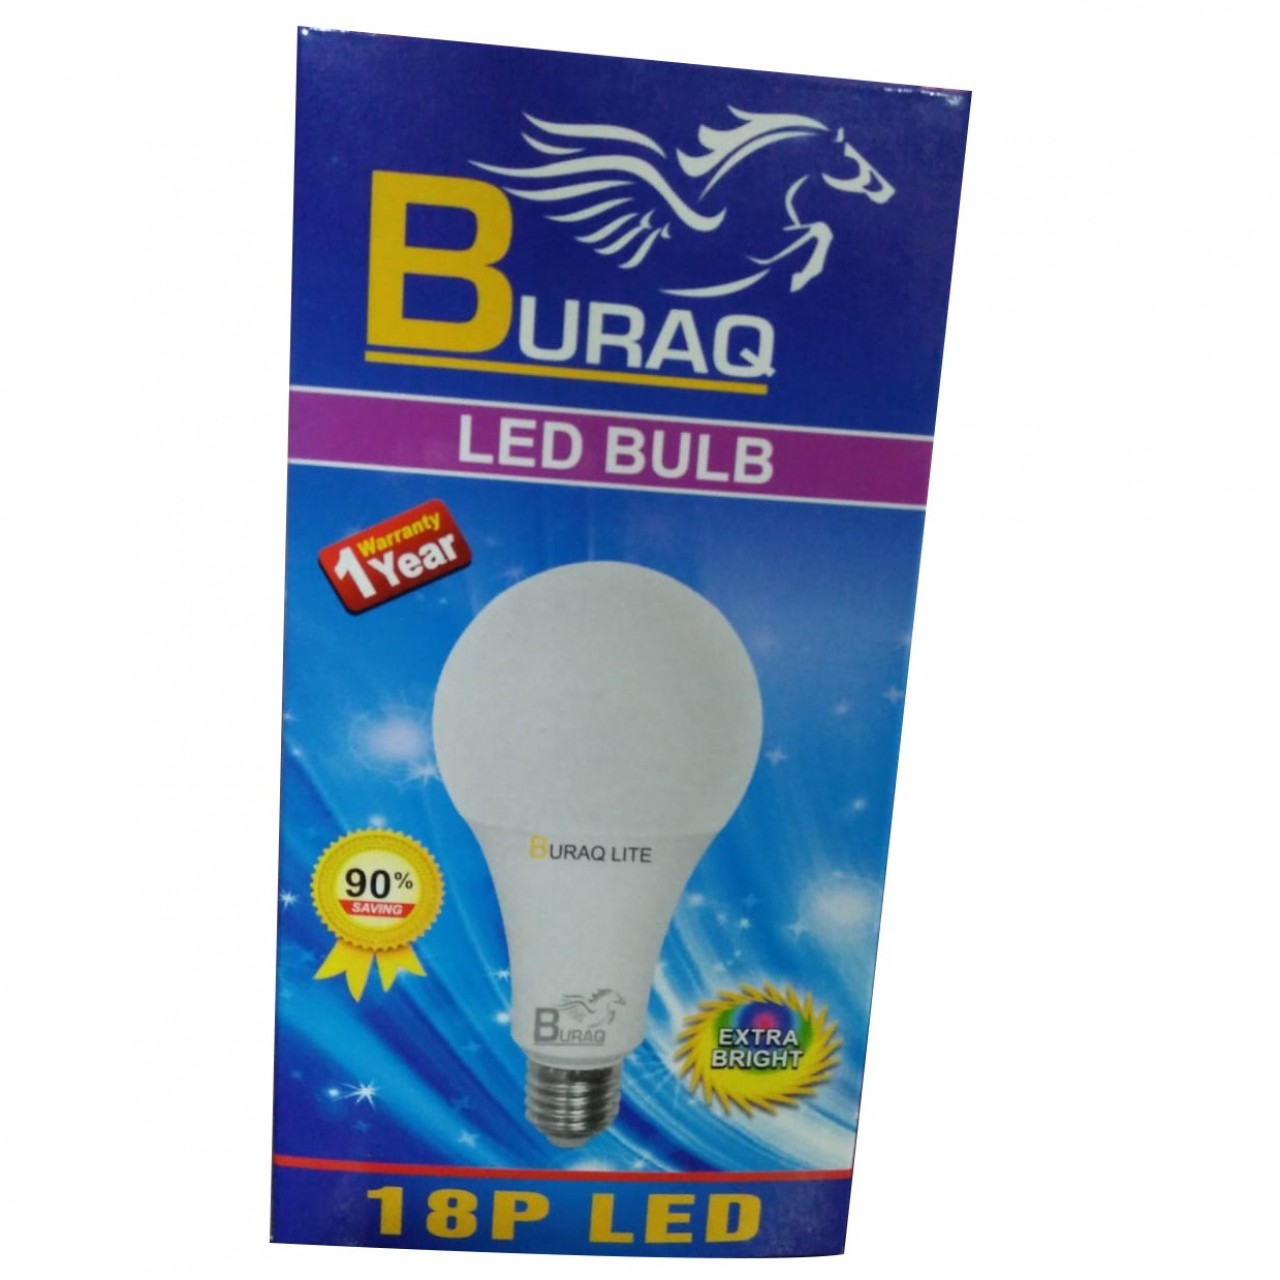 Buraq Extra Bright LED Bulb - 18P